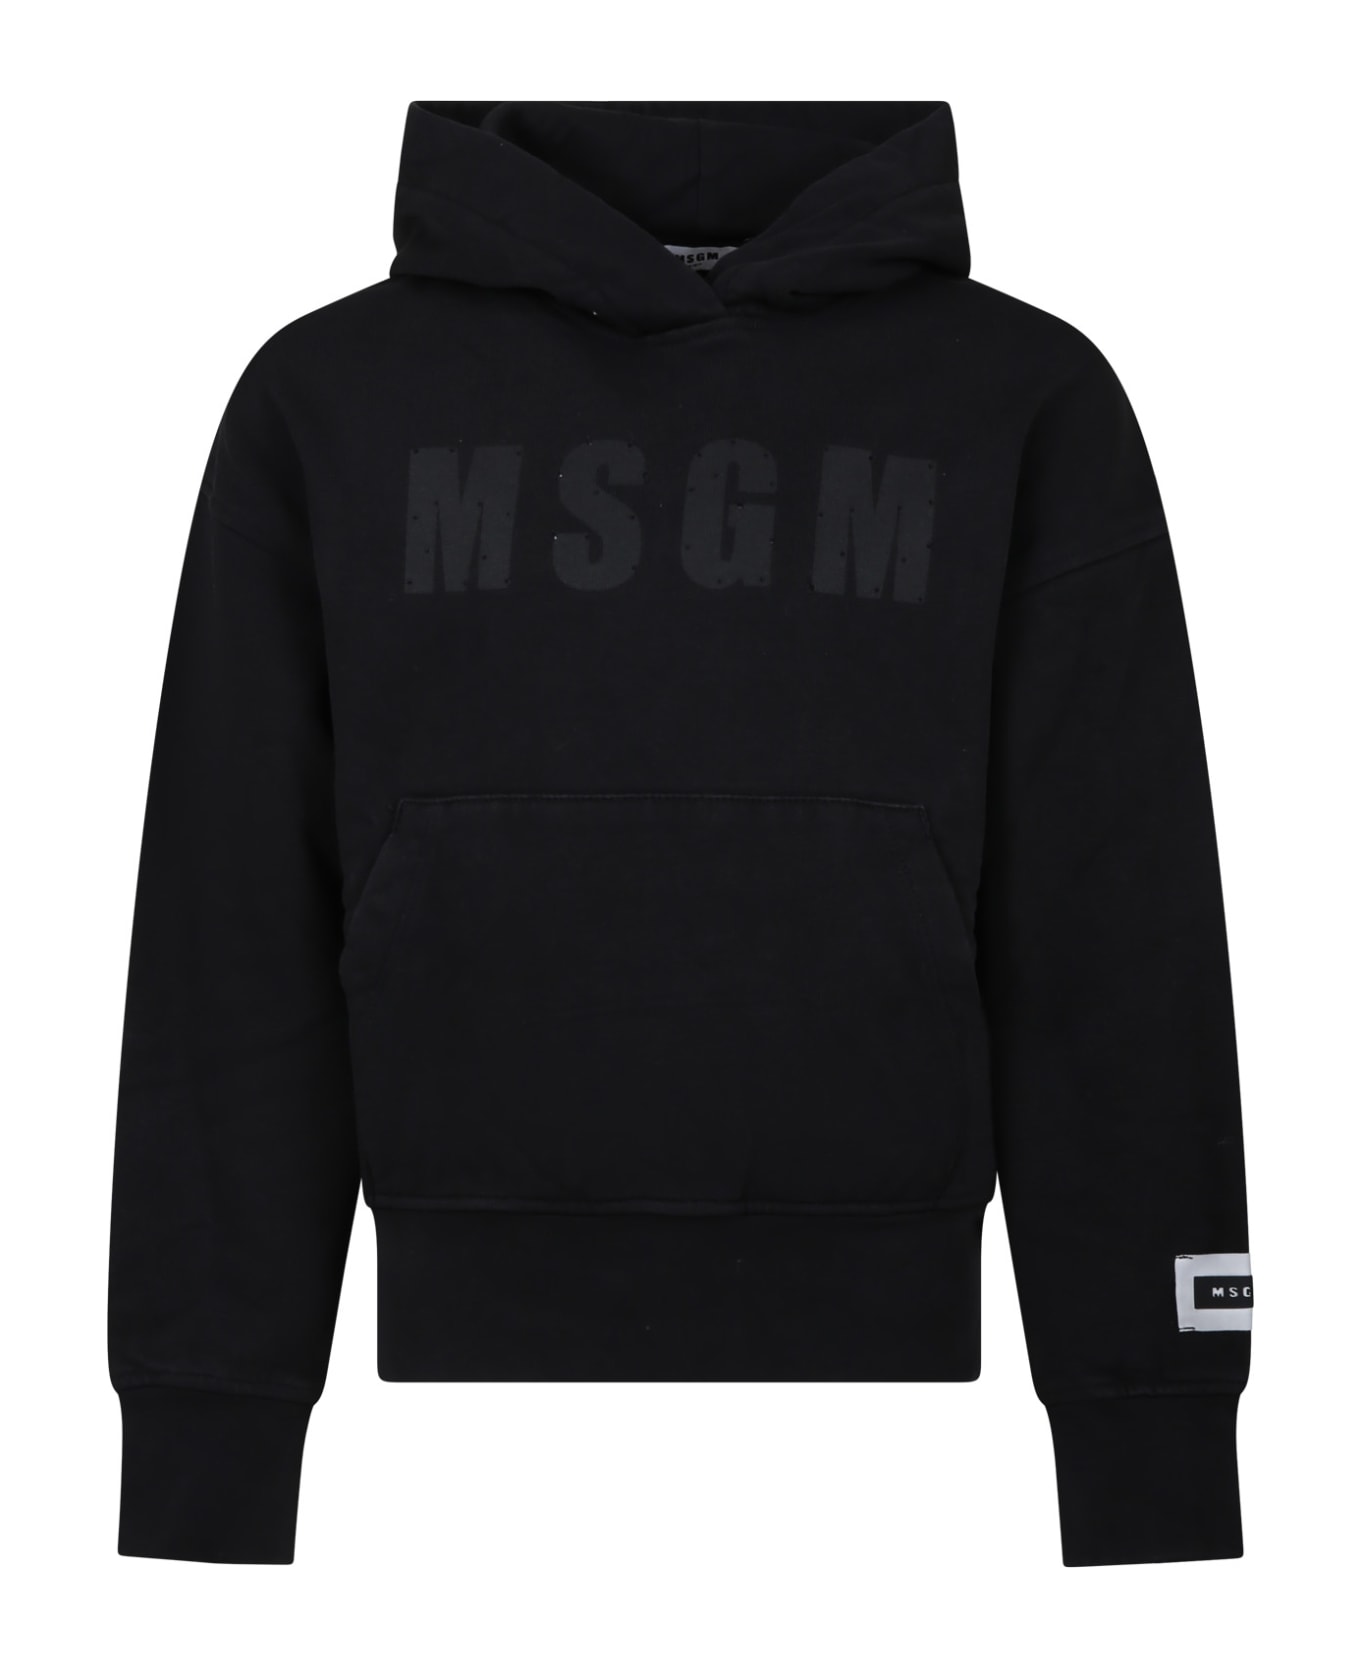 MSGM Black Sweatshirt For Kids With Black Logo - Black